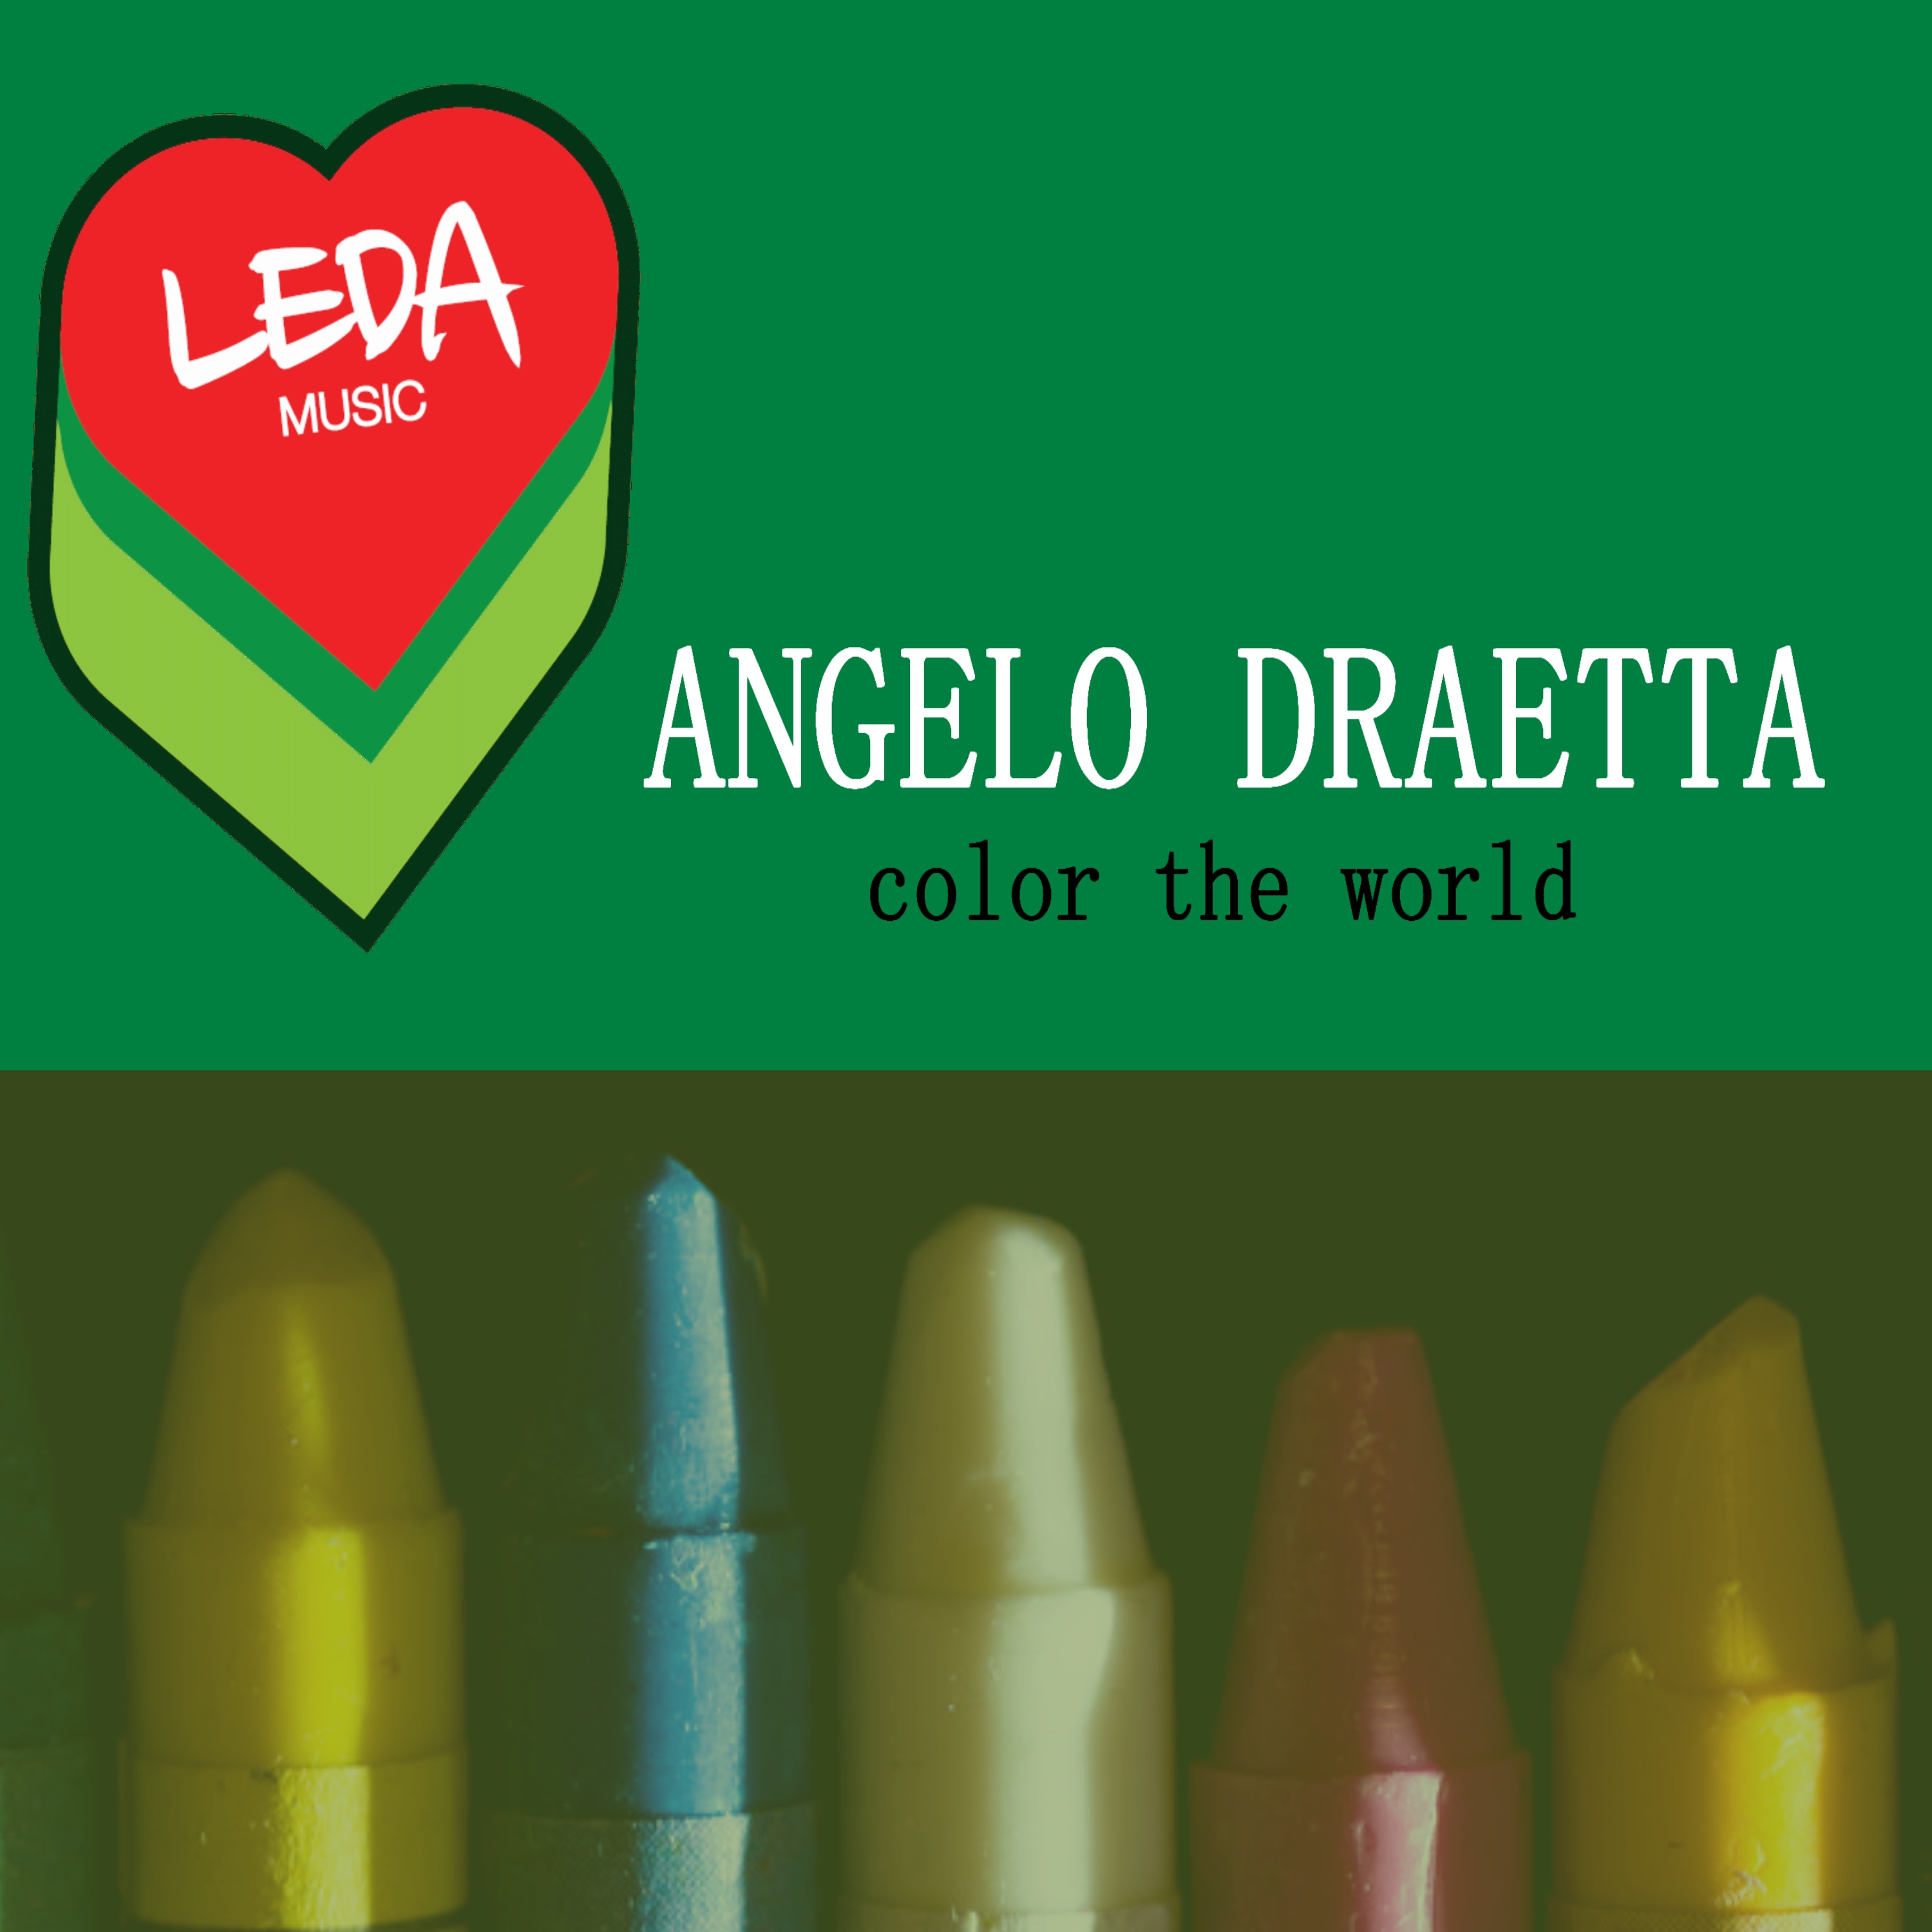 Angelo Draetta - Color The World / Leda Music